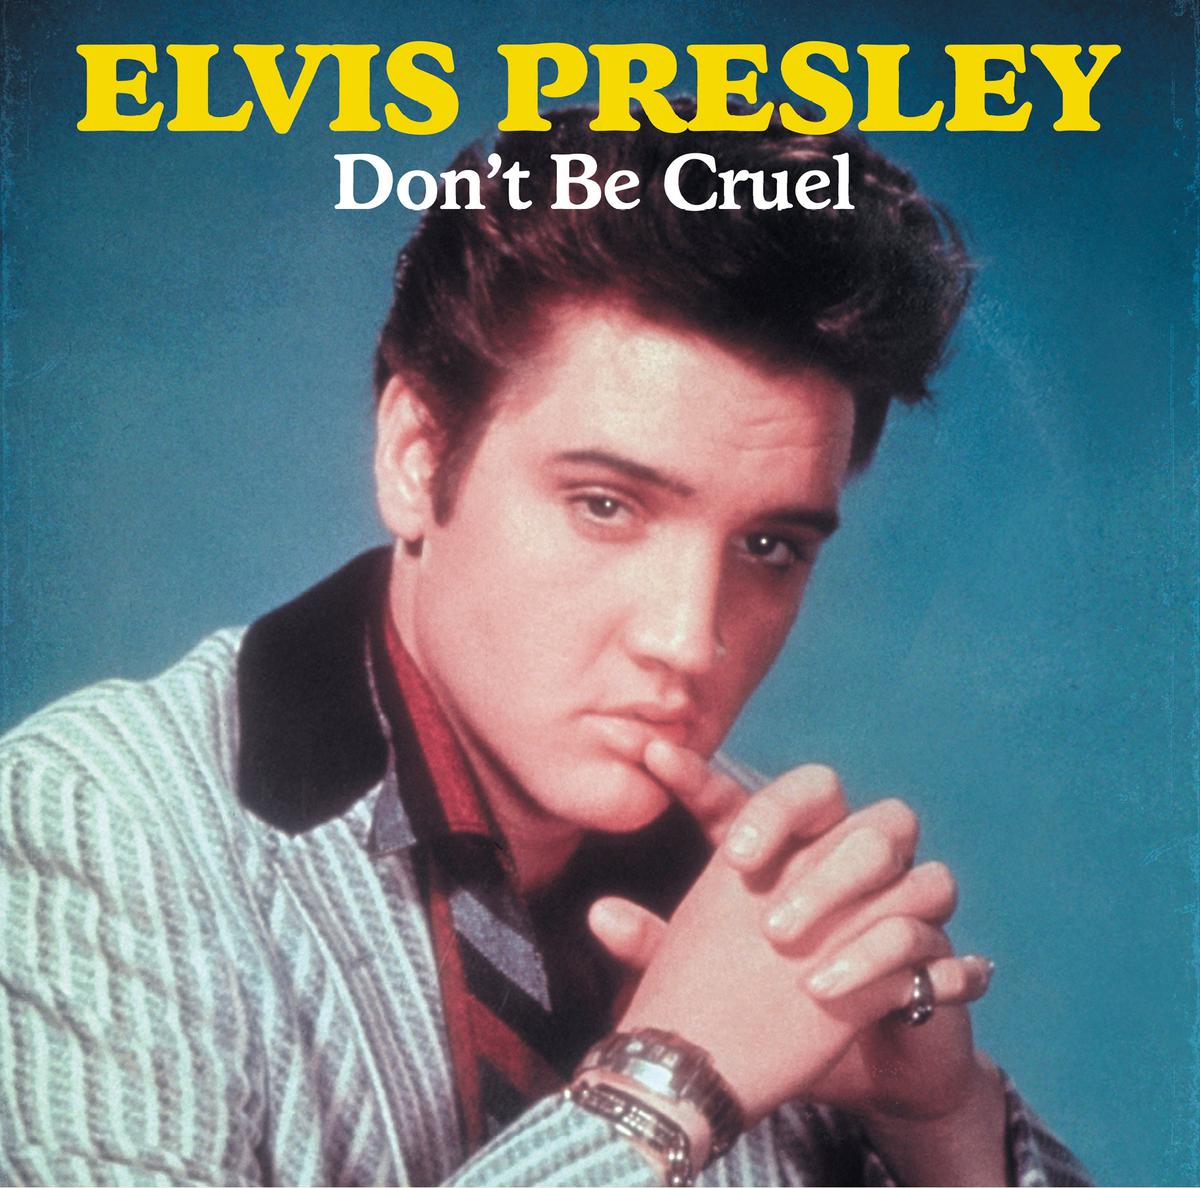 Elvis Presley - Don't Be Cruel - LP